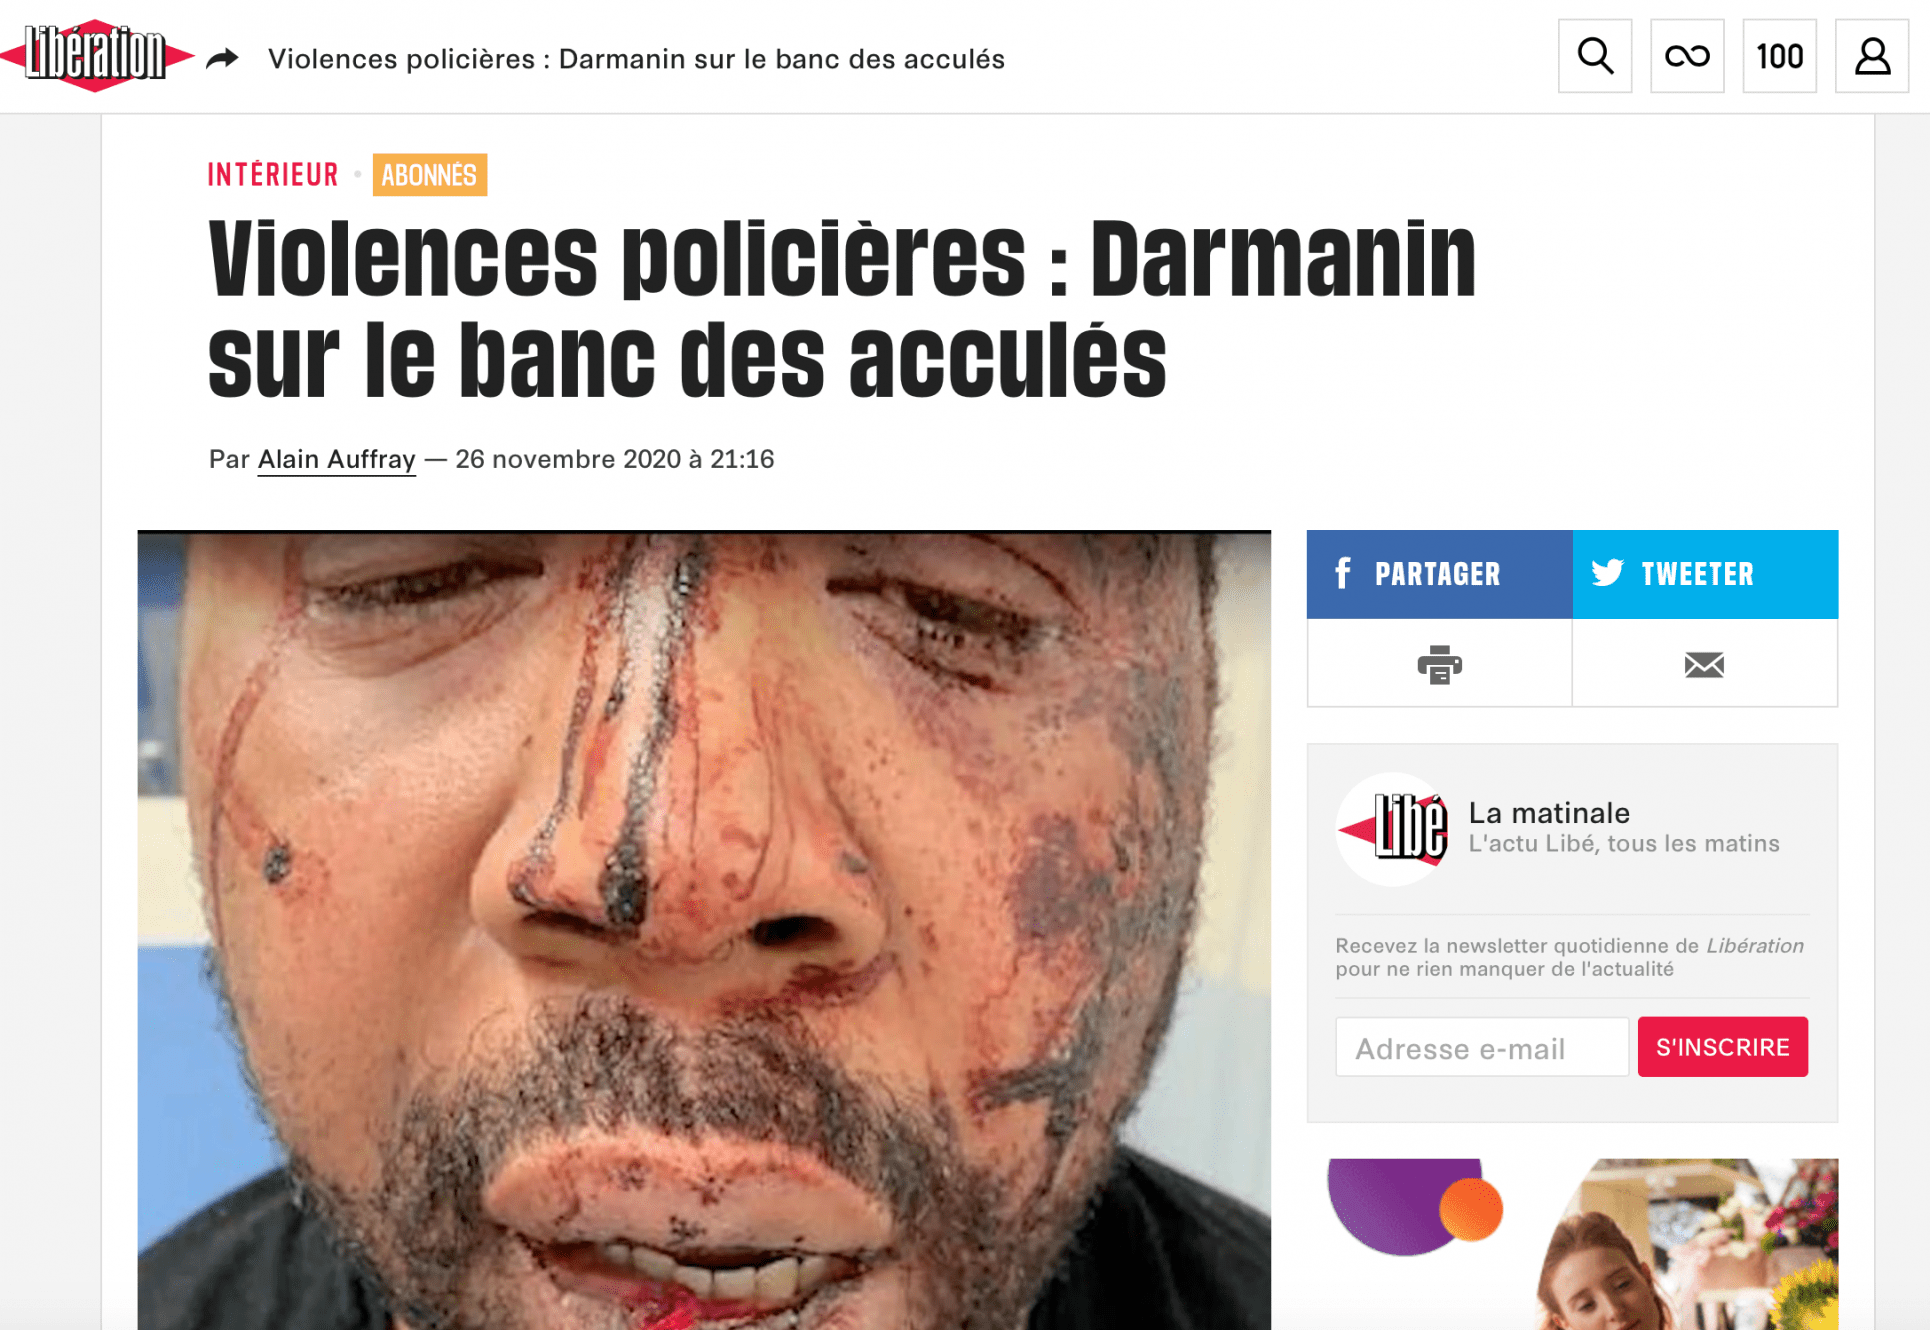 Brutal paliza a un hombre en Francia porque no llevaba mascarilla